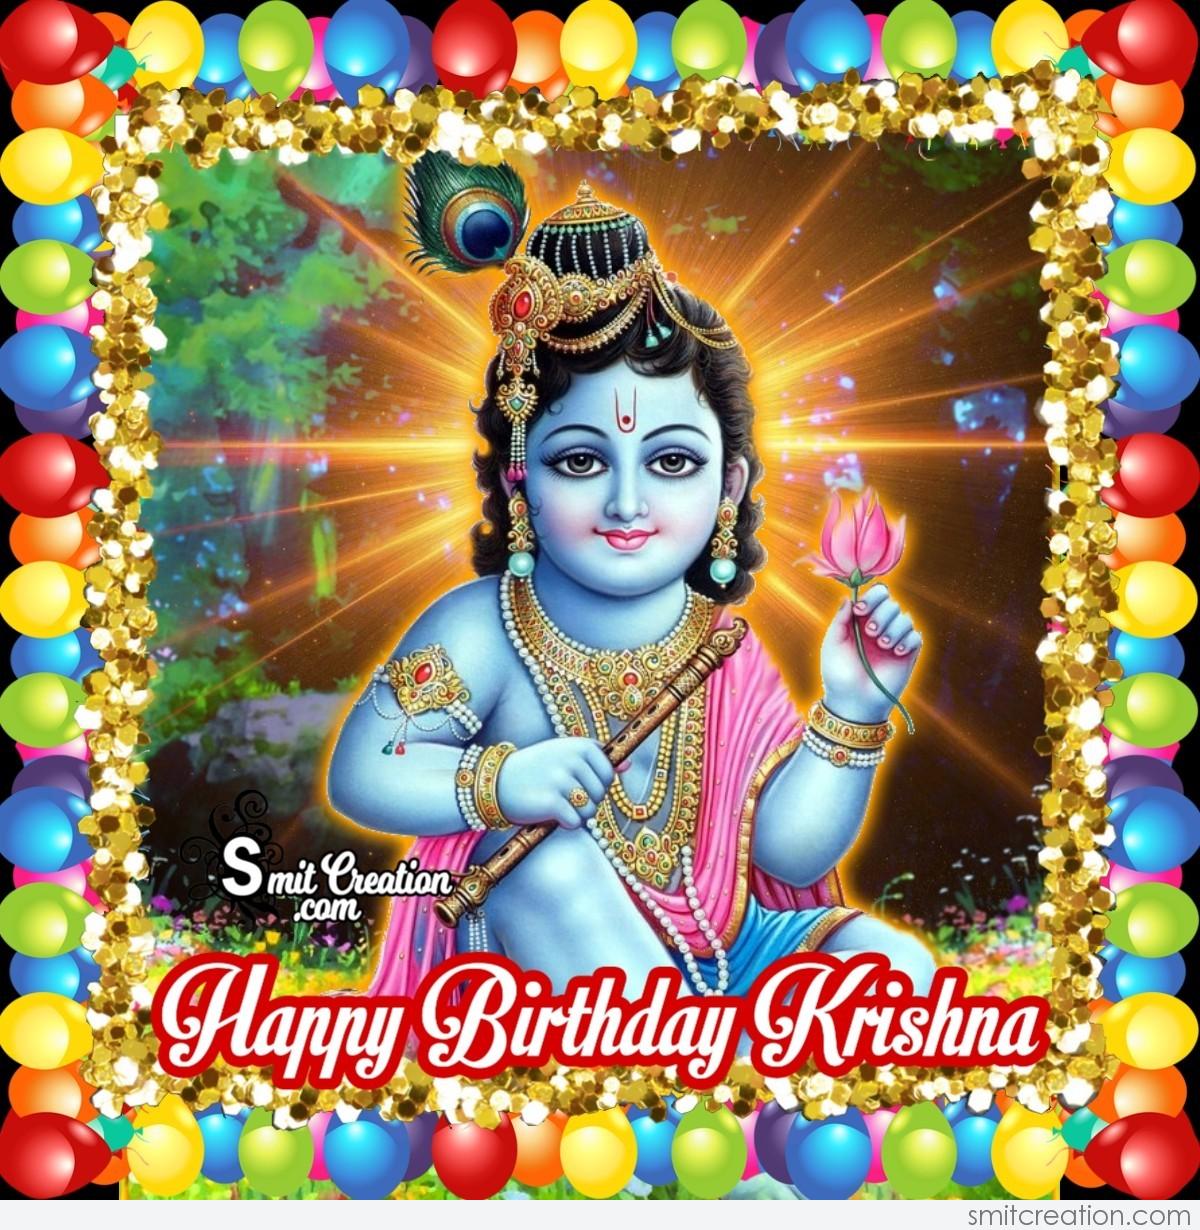 Happy Birthday Krishna Image for Dp - SmitCreation.com